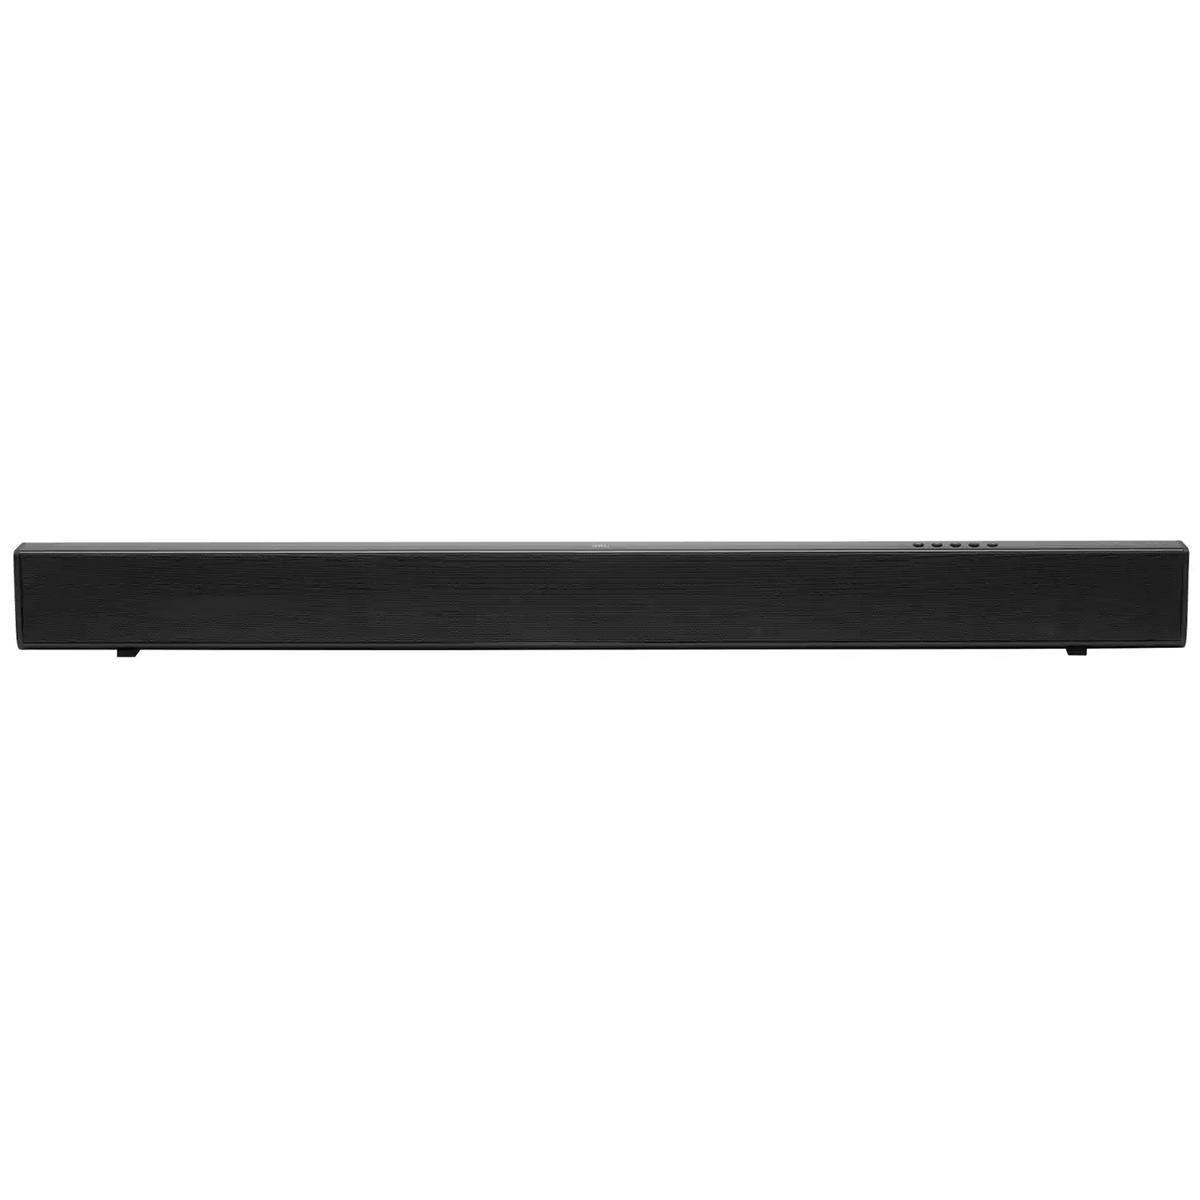 Soundbar 2.0 JBL Cinema SB110 - 55W RMS - Conexão HDMI, Óptico e Bluetooth - Subwoofer embutido - JBLSB110BLKBR